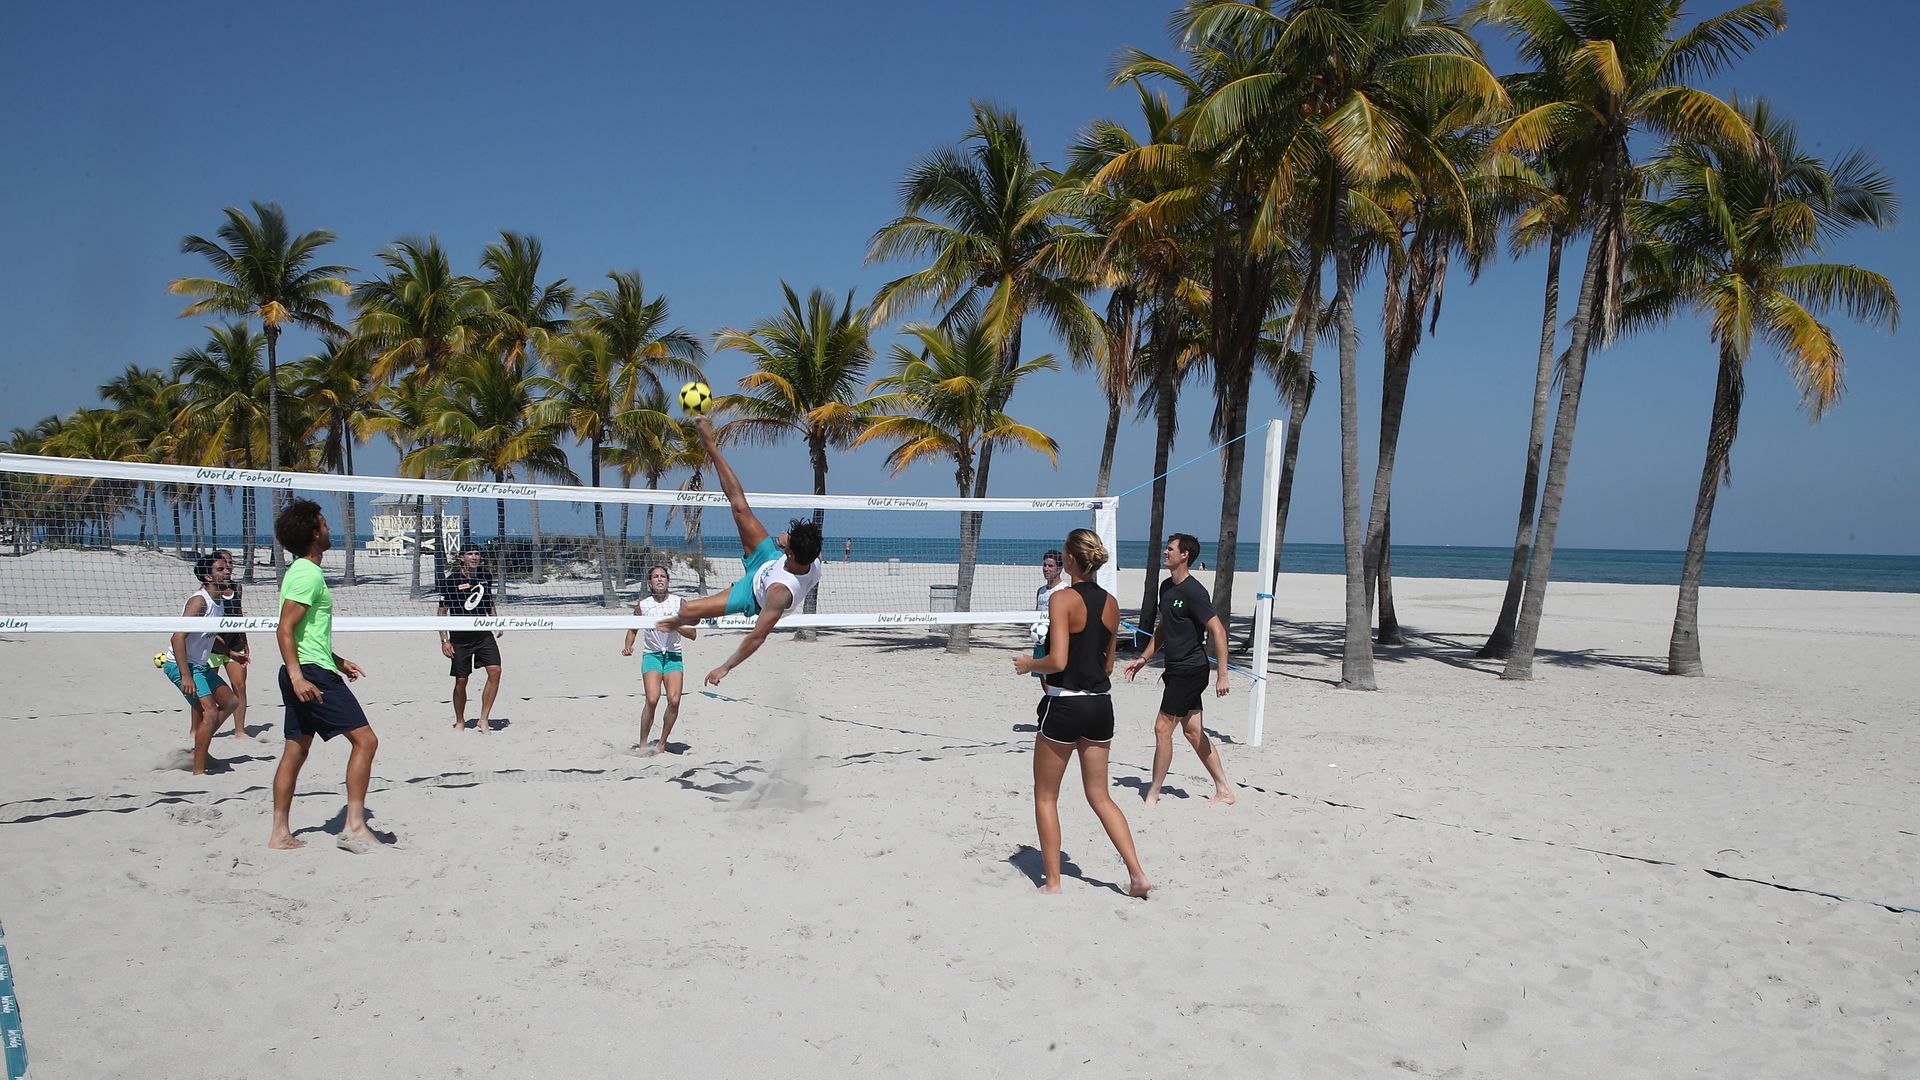 Beach football at Crandon Beach on March 22, 2017 in Key Biscayne, Florida. 